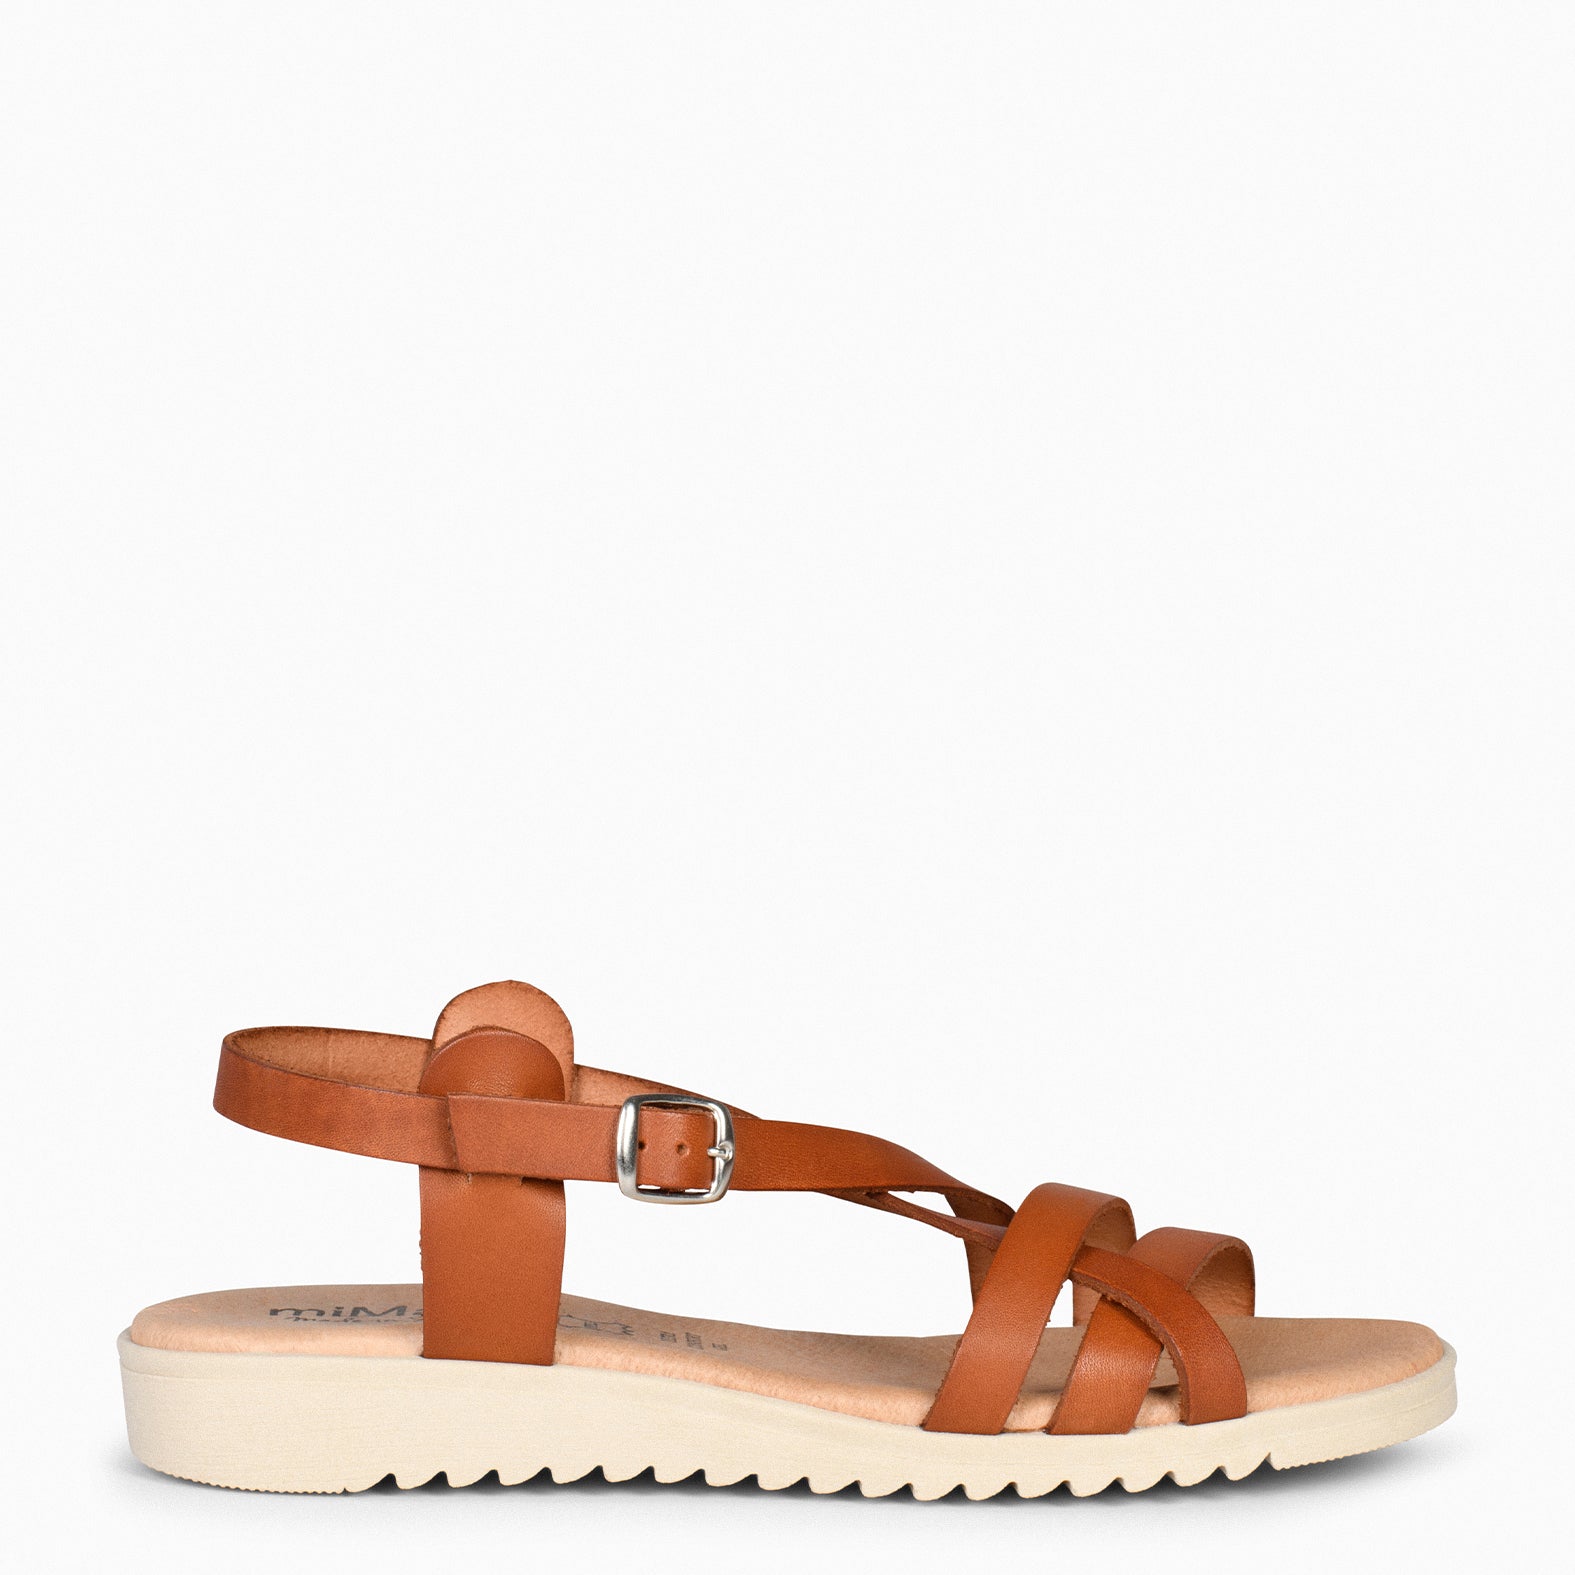 SPIRIT – CAMEL Flat sandal with crossed strap